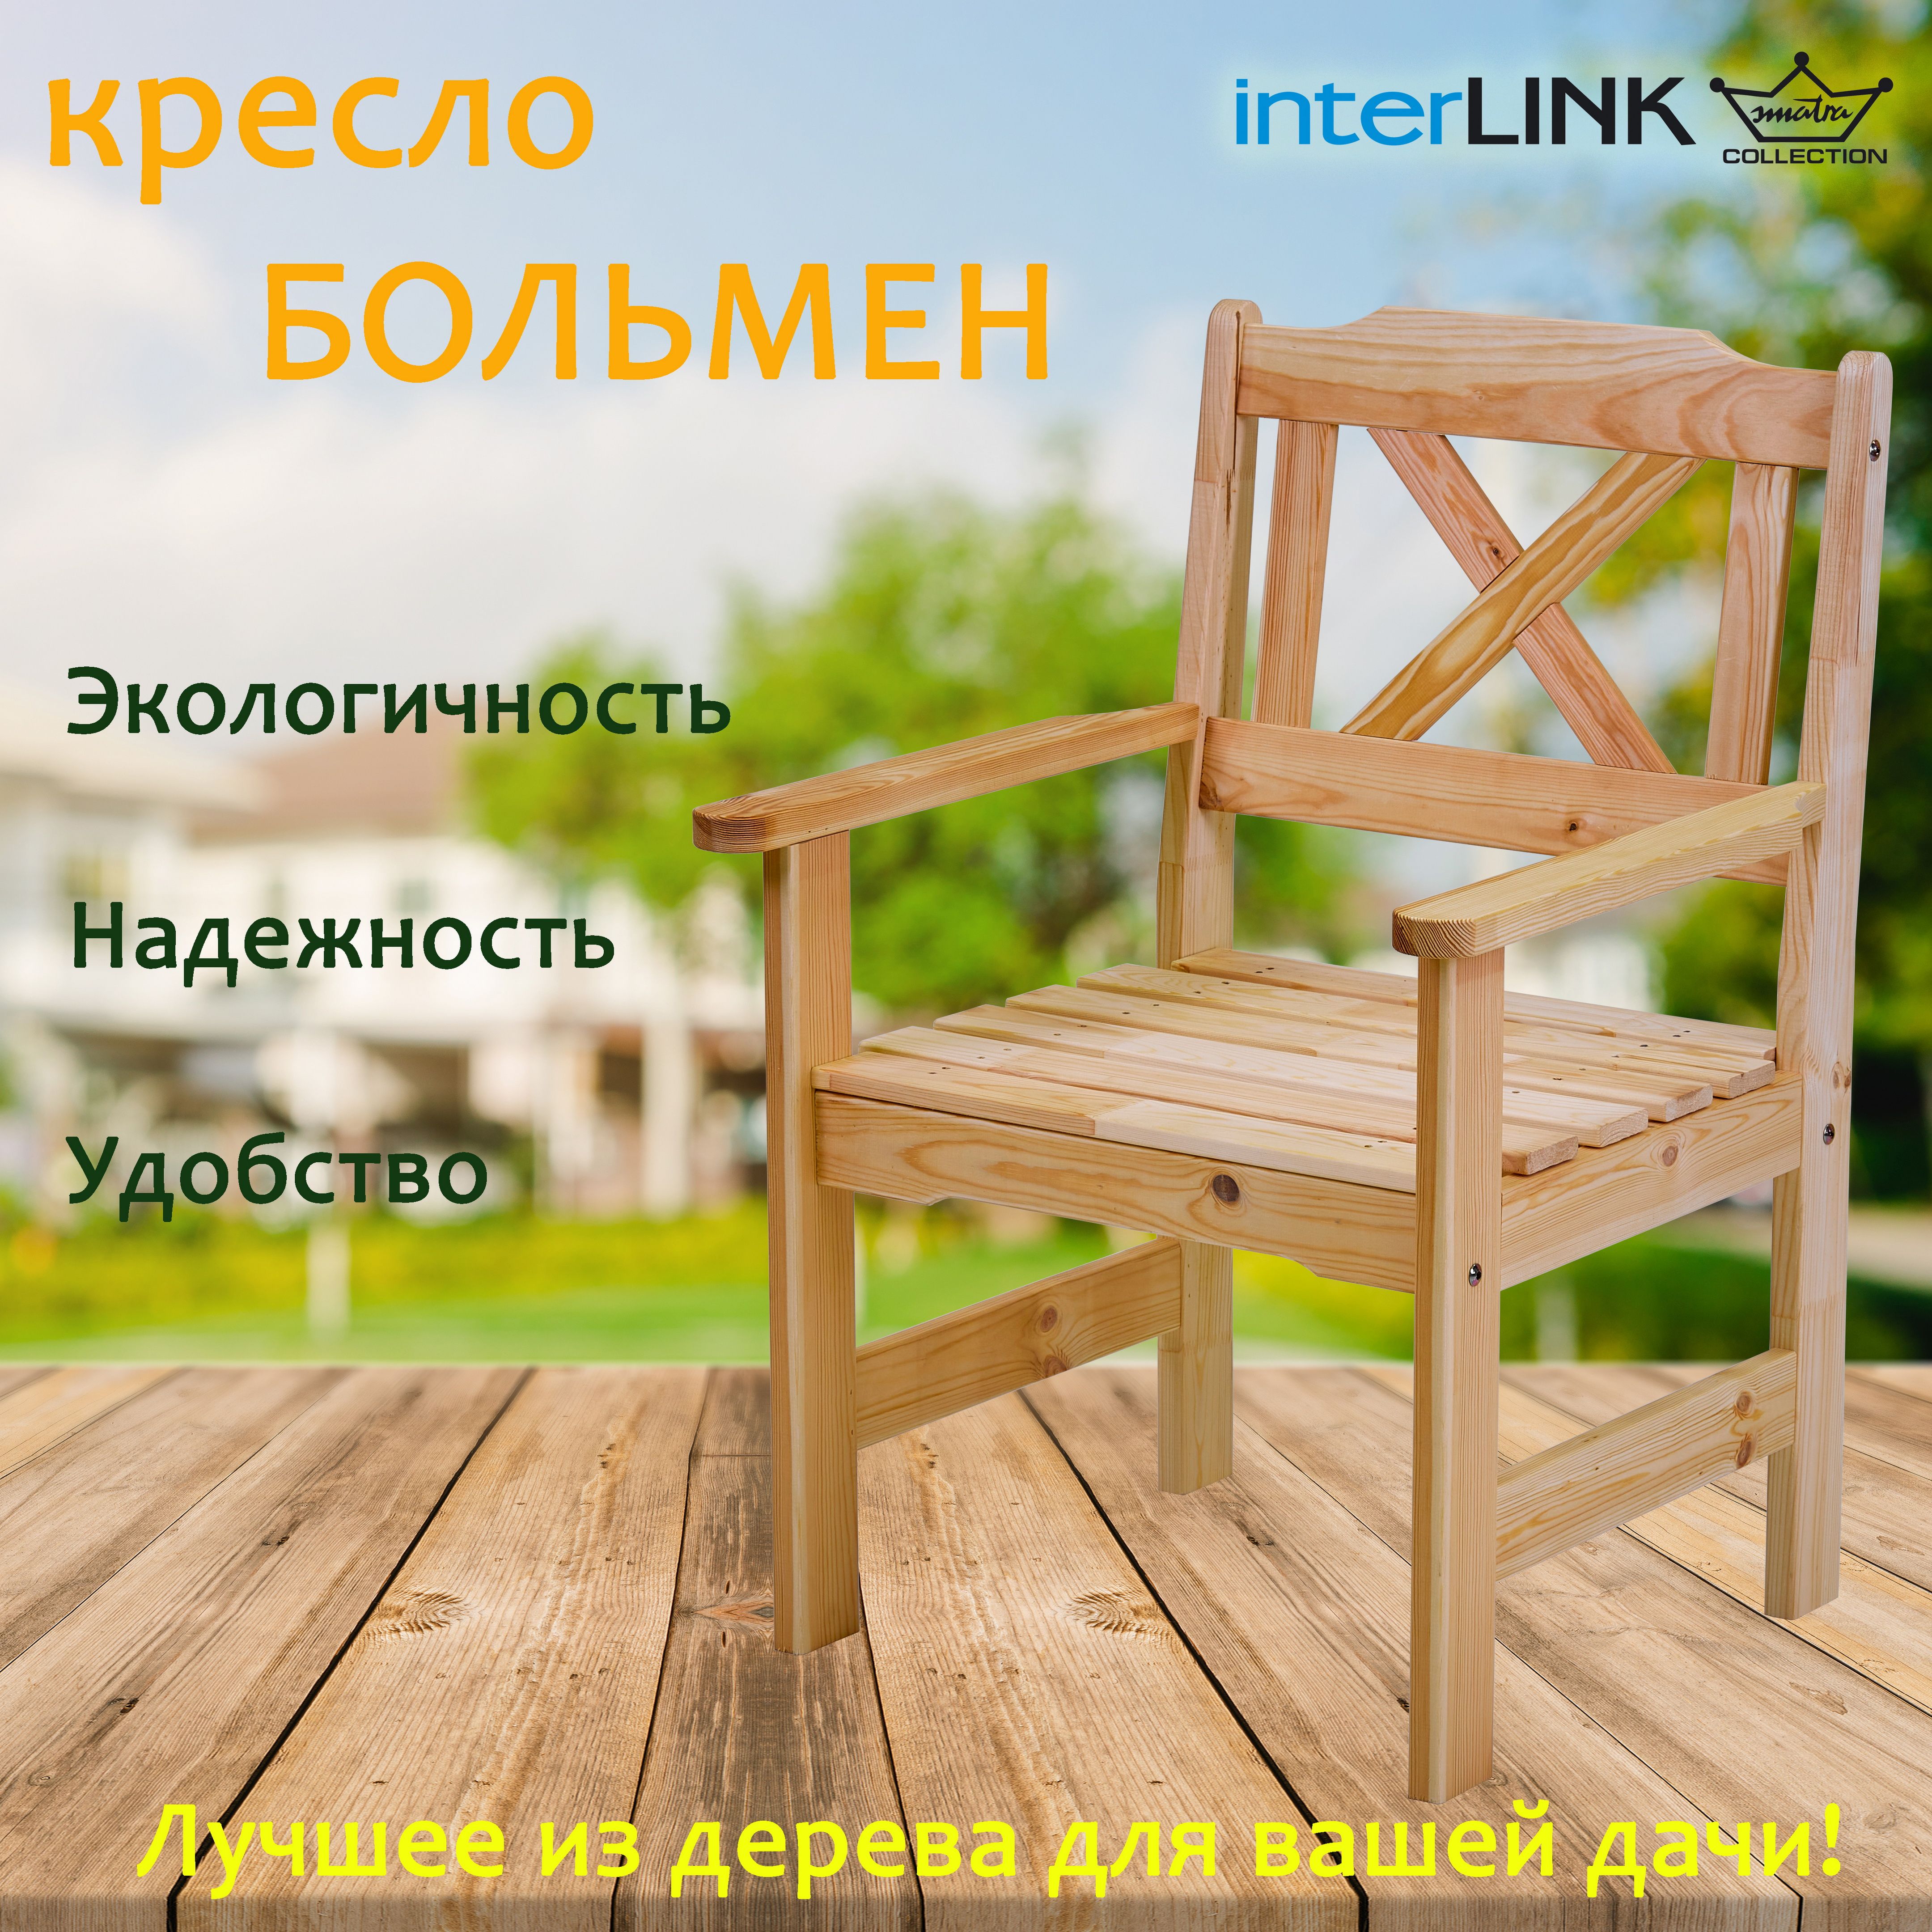 Садовое кресло Interlink Больмен 500252500252 62х57х89см натуральный